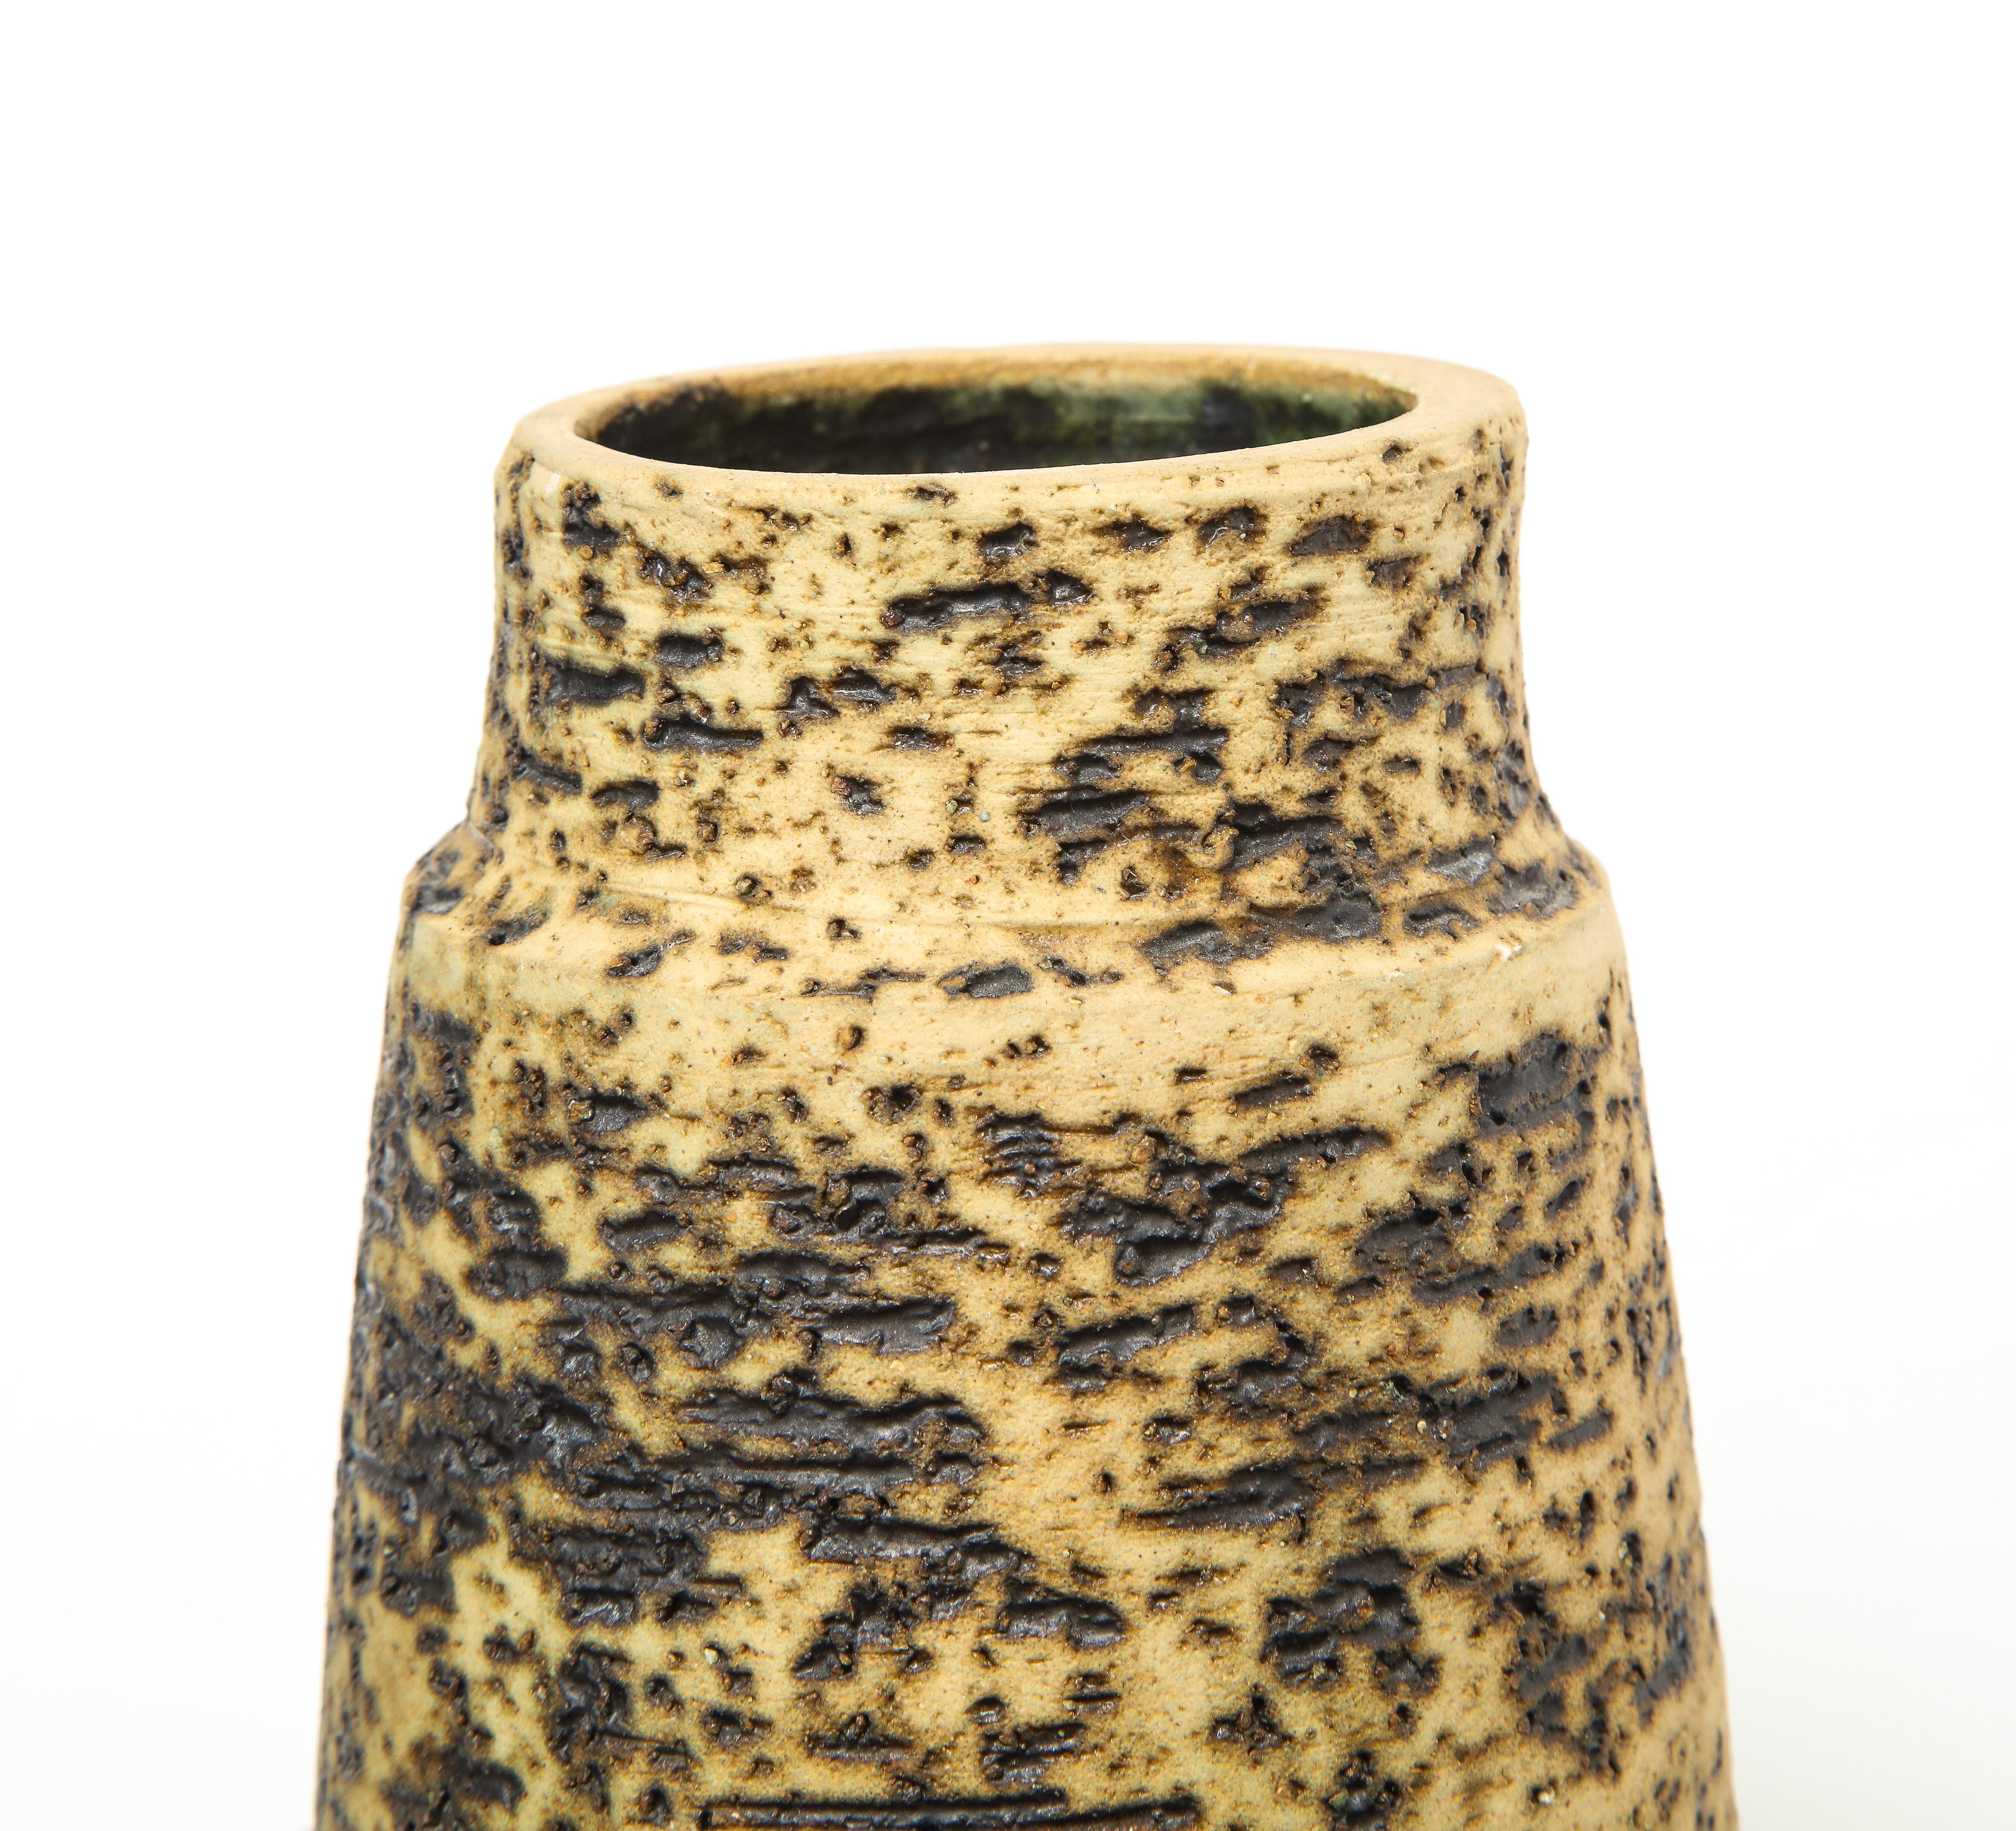 20th Century Pieter Groeneveld Speckled Ceramic Vase, Holland, circa 1960s